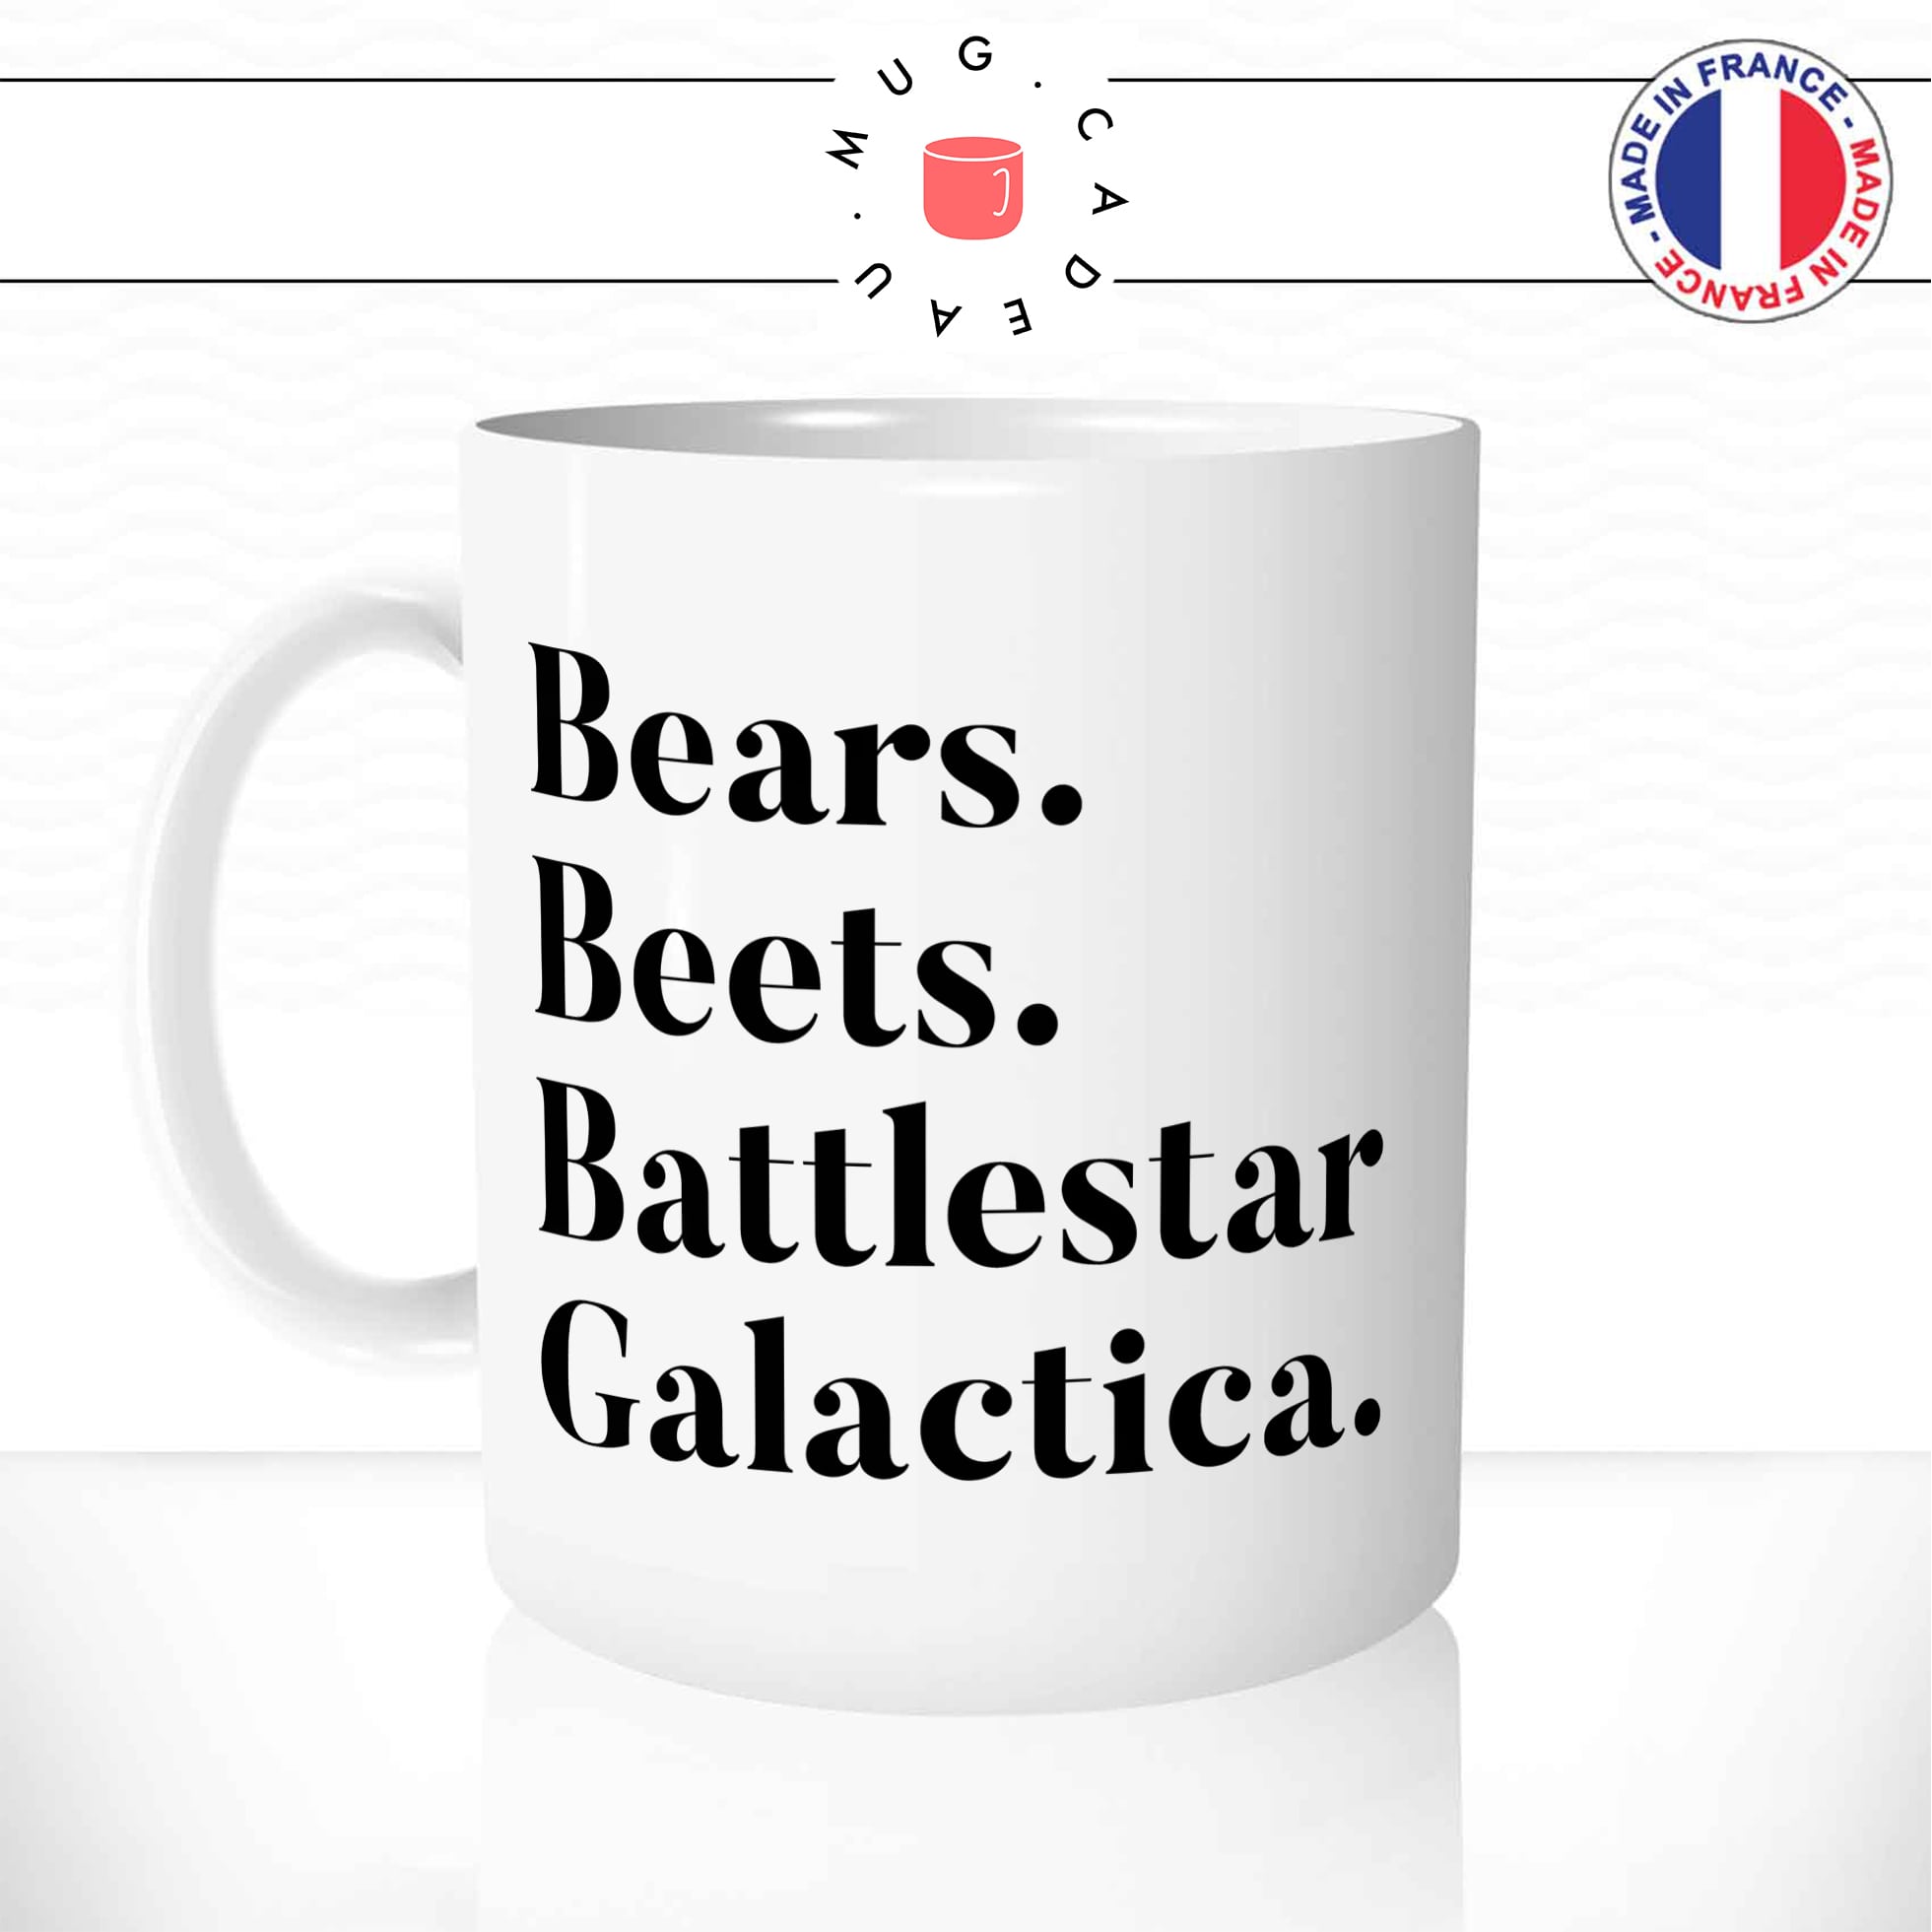 Mug Bears Beets Battlestar Galactica